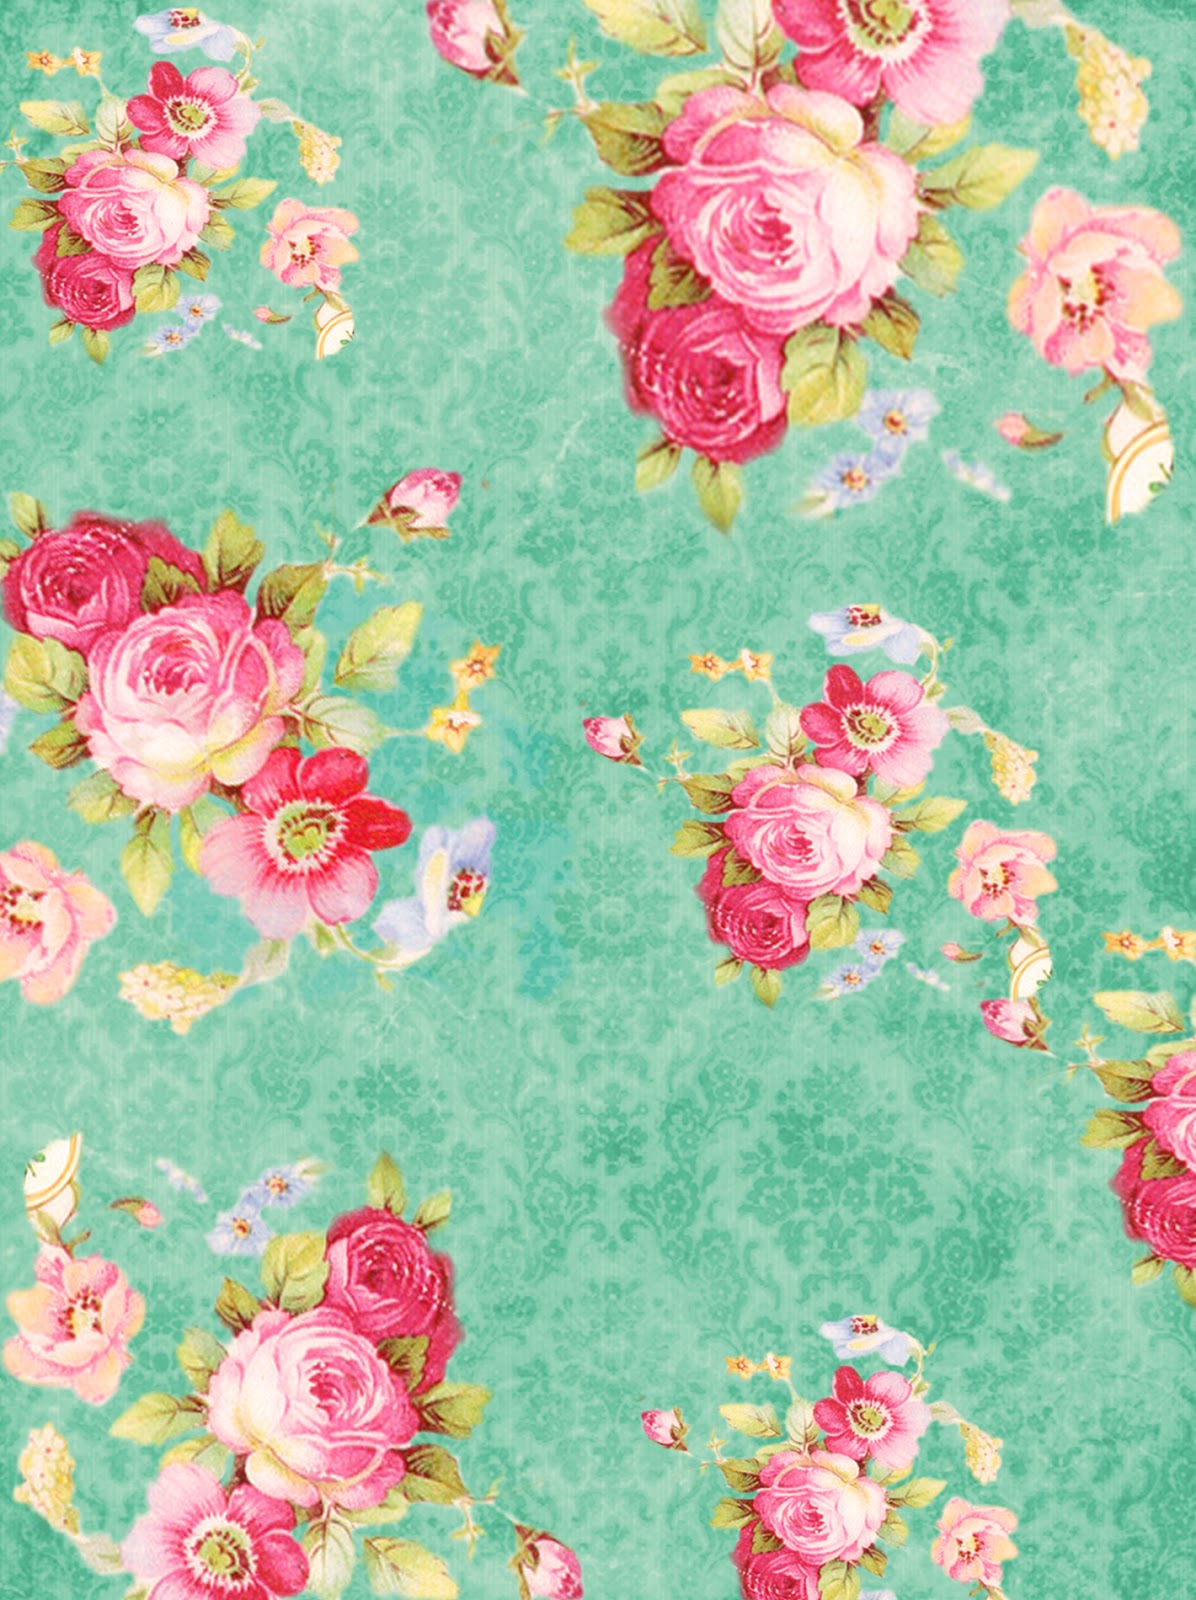 vintage flower wallpaper,pink,green,pattern,aqua,rose